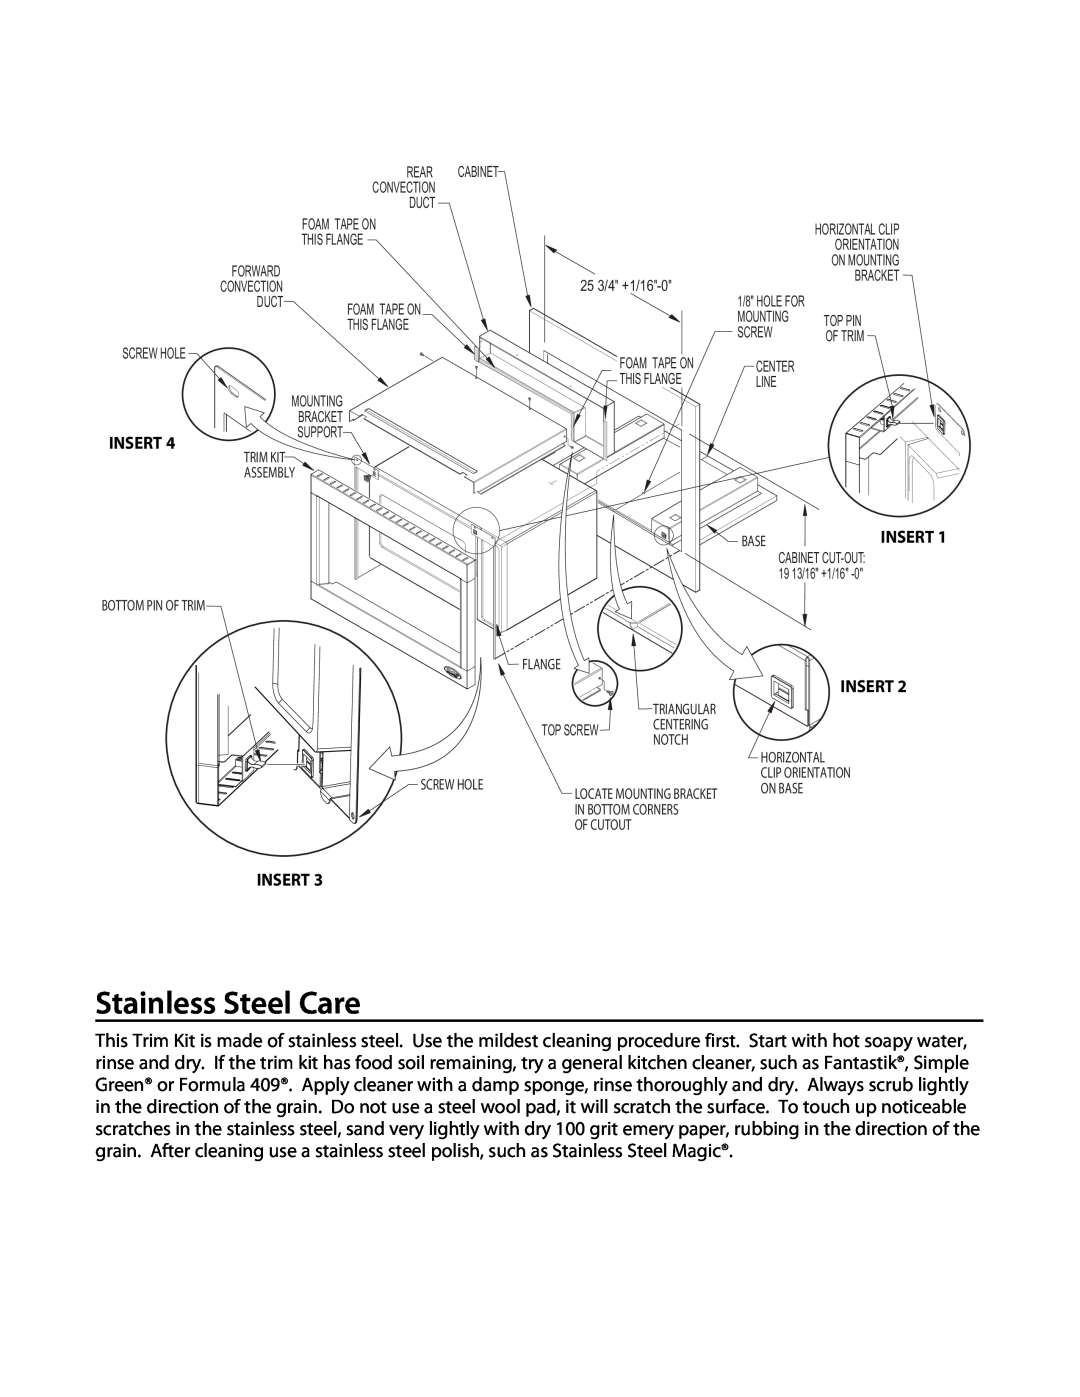 DCS CMOTTK30 installation instructions Stainless Steel Care, Insert 